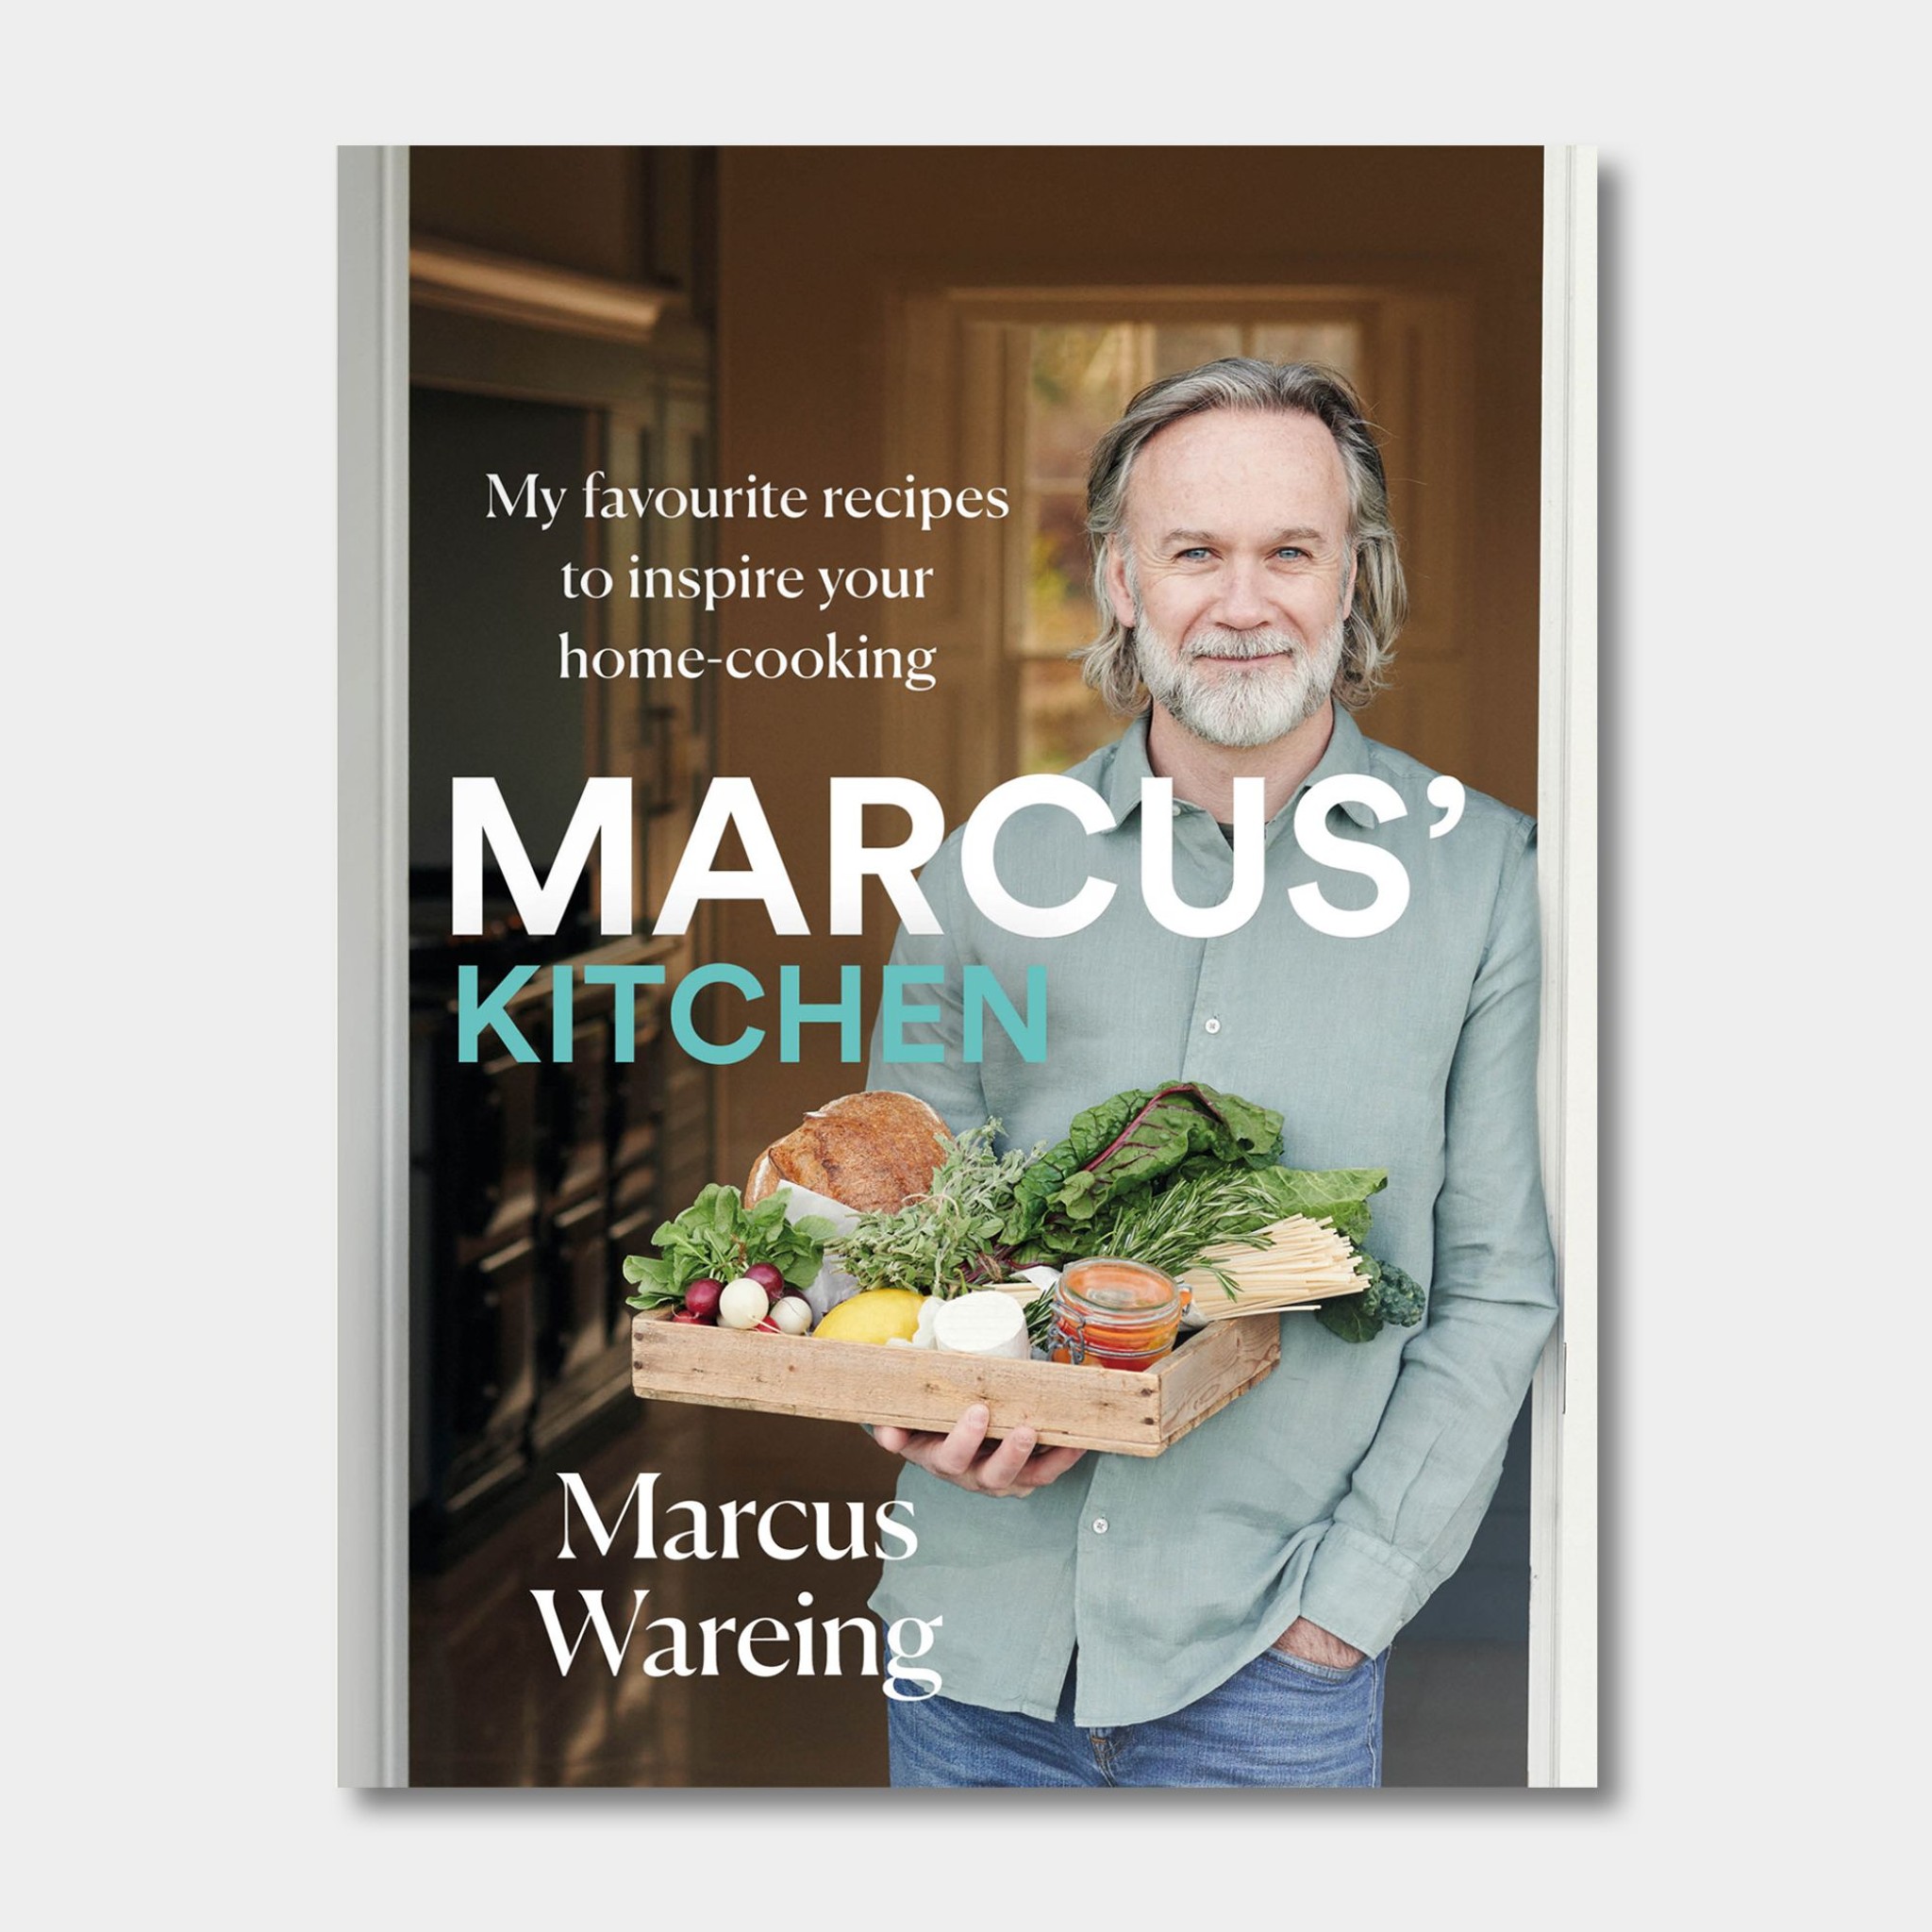 Marcus' Kitchen cookbook by Marcus Wareing